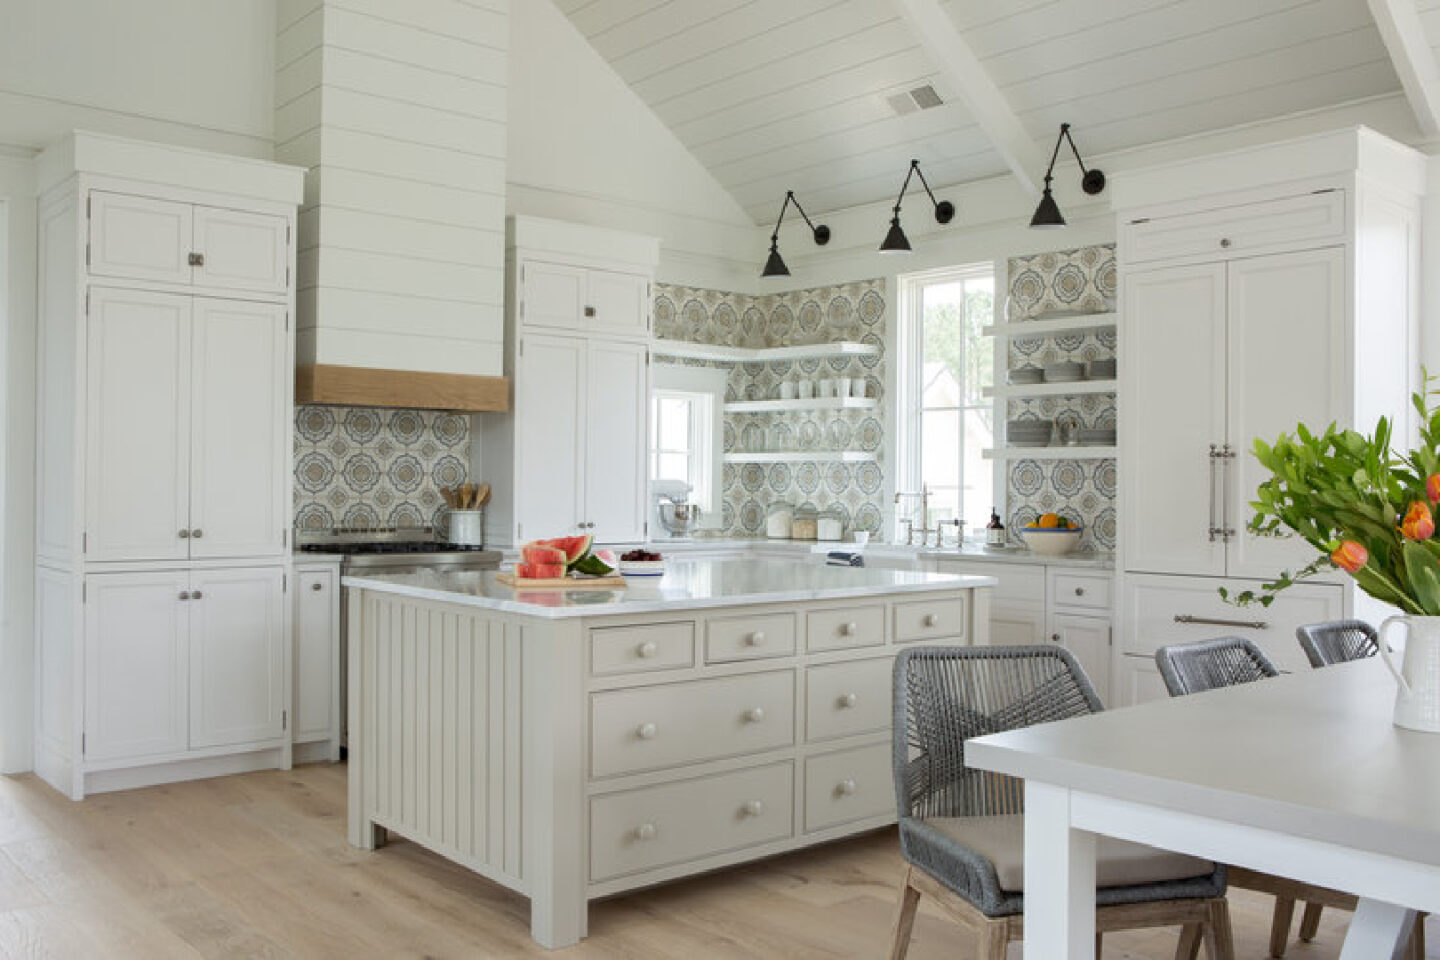 Benjamin Moore White OC-151 coastal kitchen with Shaker cabinets, backsplash (Duquesa Jasmine in Mezzanotte by Walker Zanger), and white oak floors. Lisa Furey Interiors.